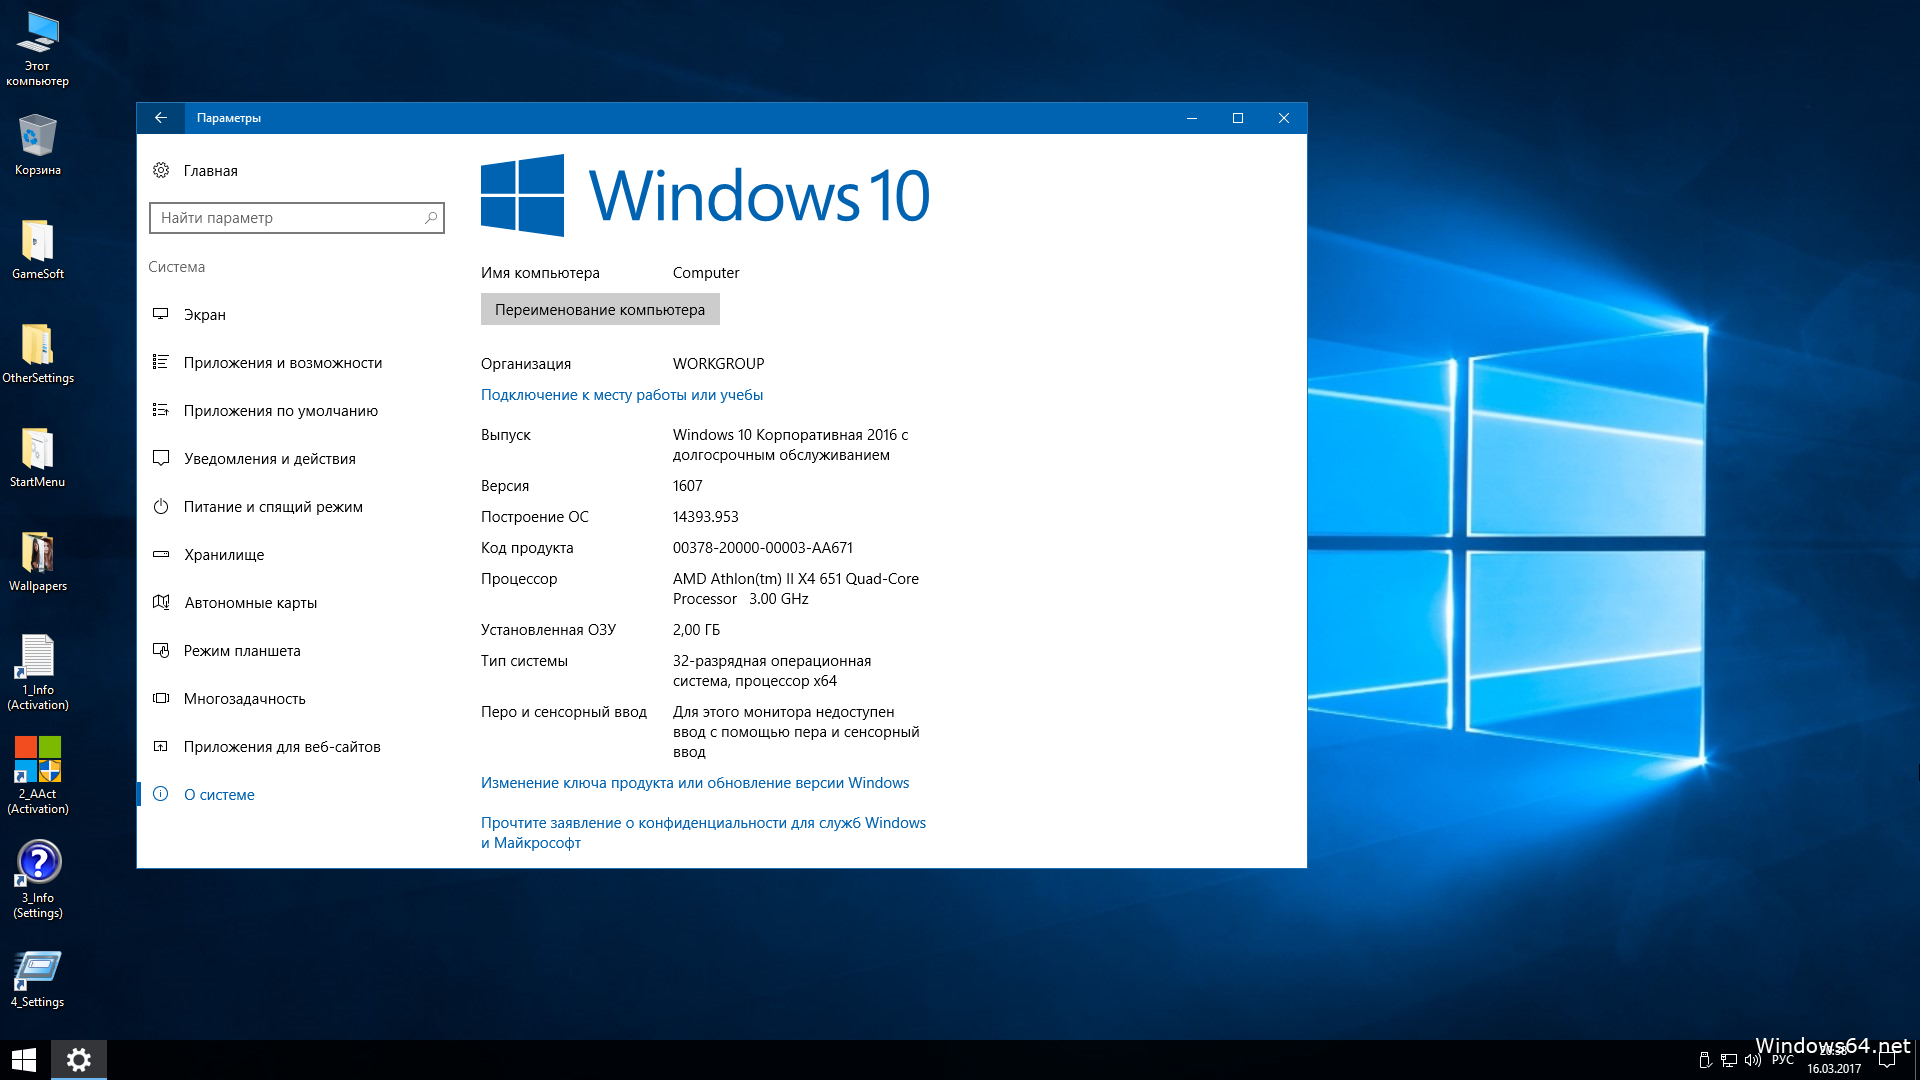 Enable windows 10. ОС Microsoft Windows 10. Windows 10 Enterprise. Microsoft Windows 10 корпоративная. Windows 10 Enterprise 2016 LTSB.